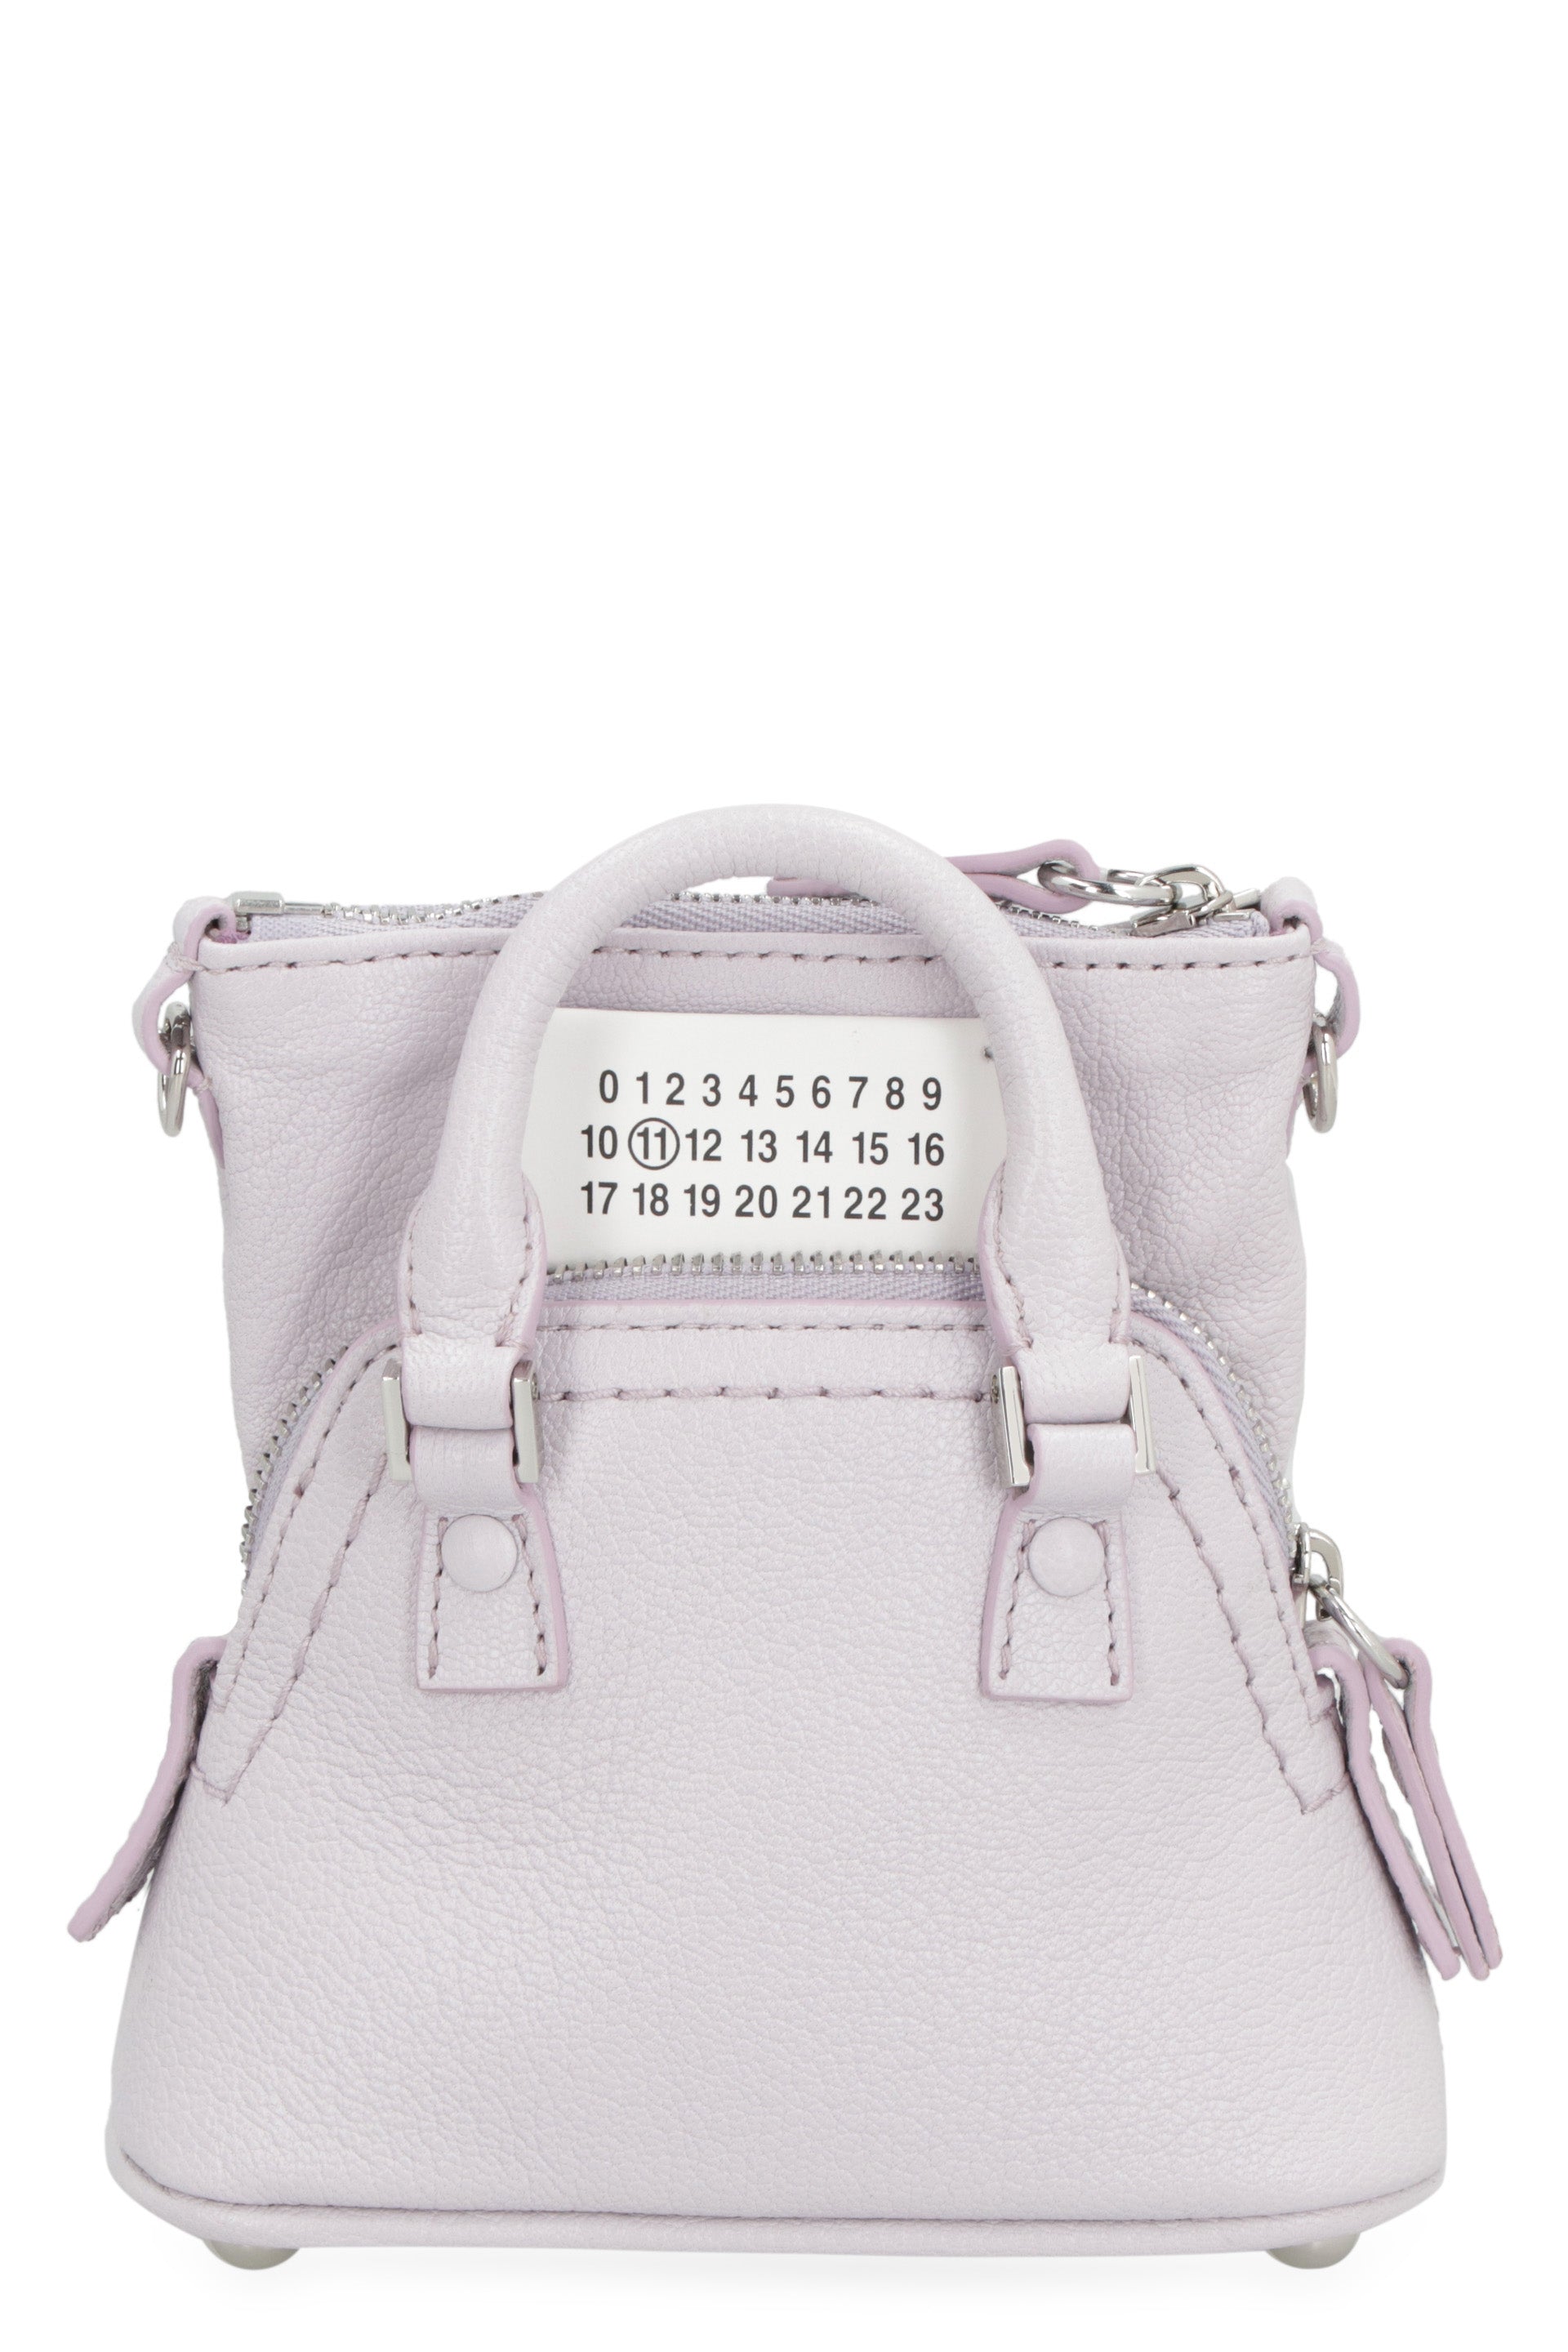 Shop Maison Margiela Luxurious Lilac Leather Crossbody Handbag For The Fashion-forward Man